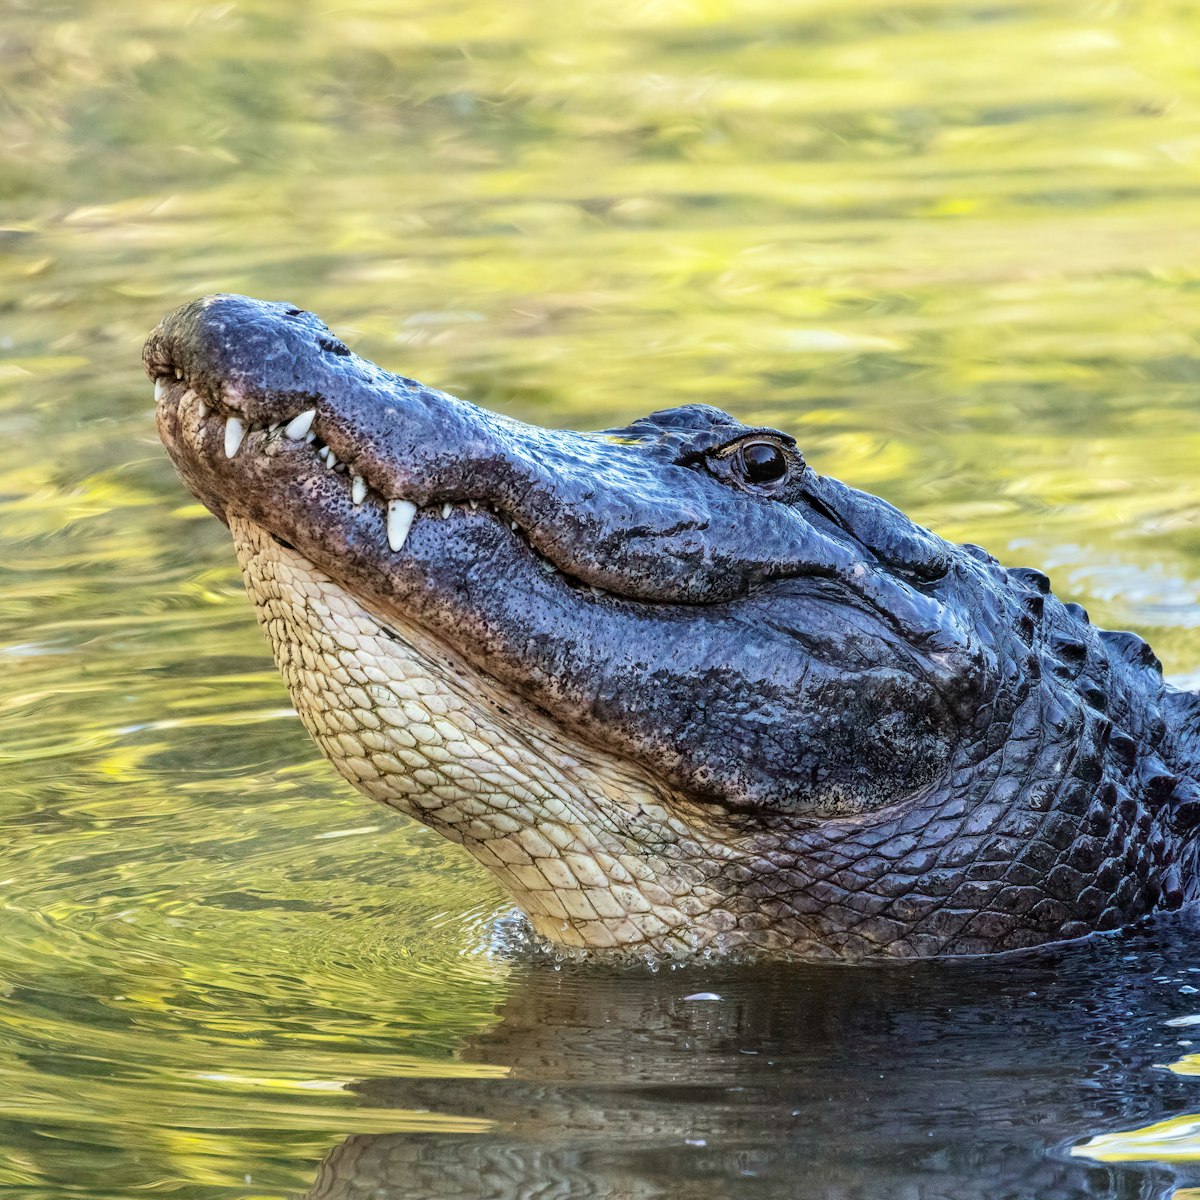 Alligator Farm Zoological Park